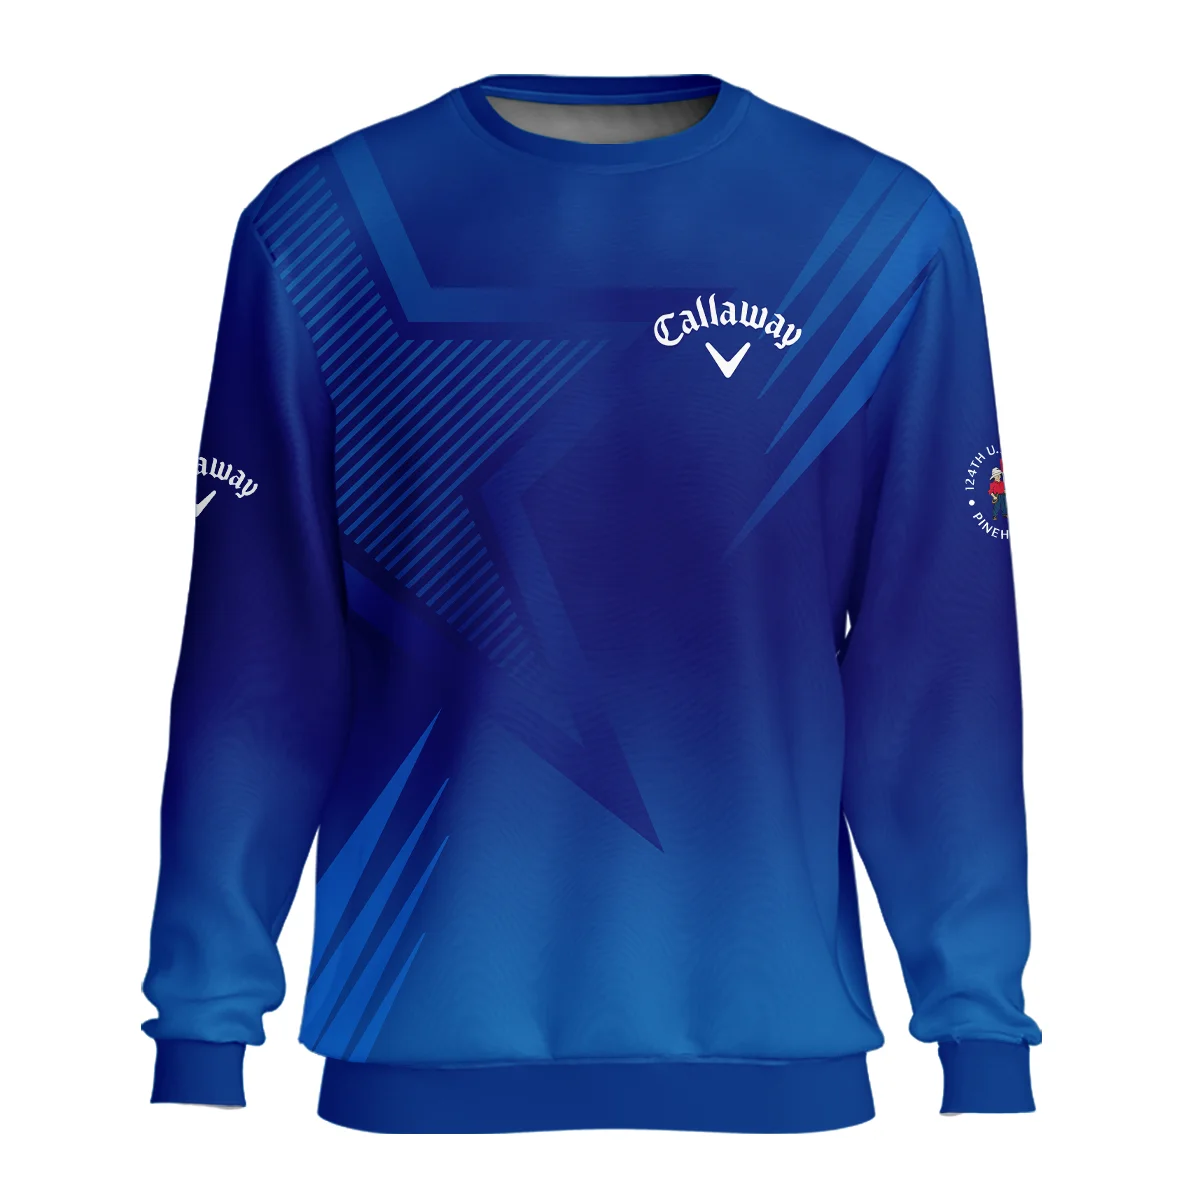 124th U.S. Open Pinehurst No.2 Callaway Unisex Sweatshirt Dark Blue Gradient Star Pattern Sweatshirt